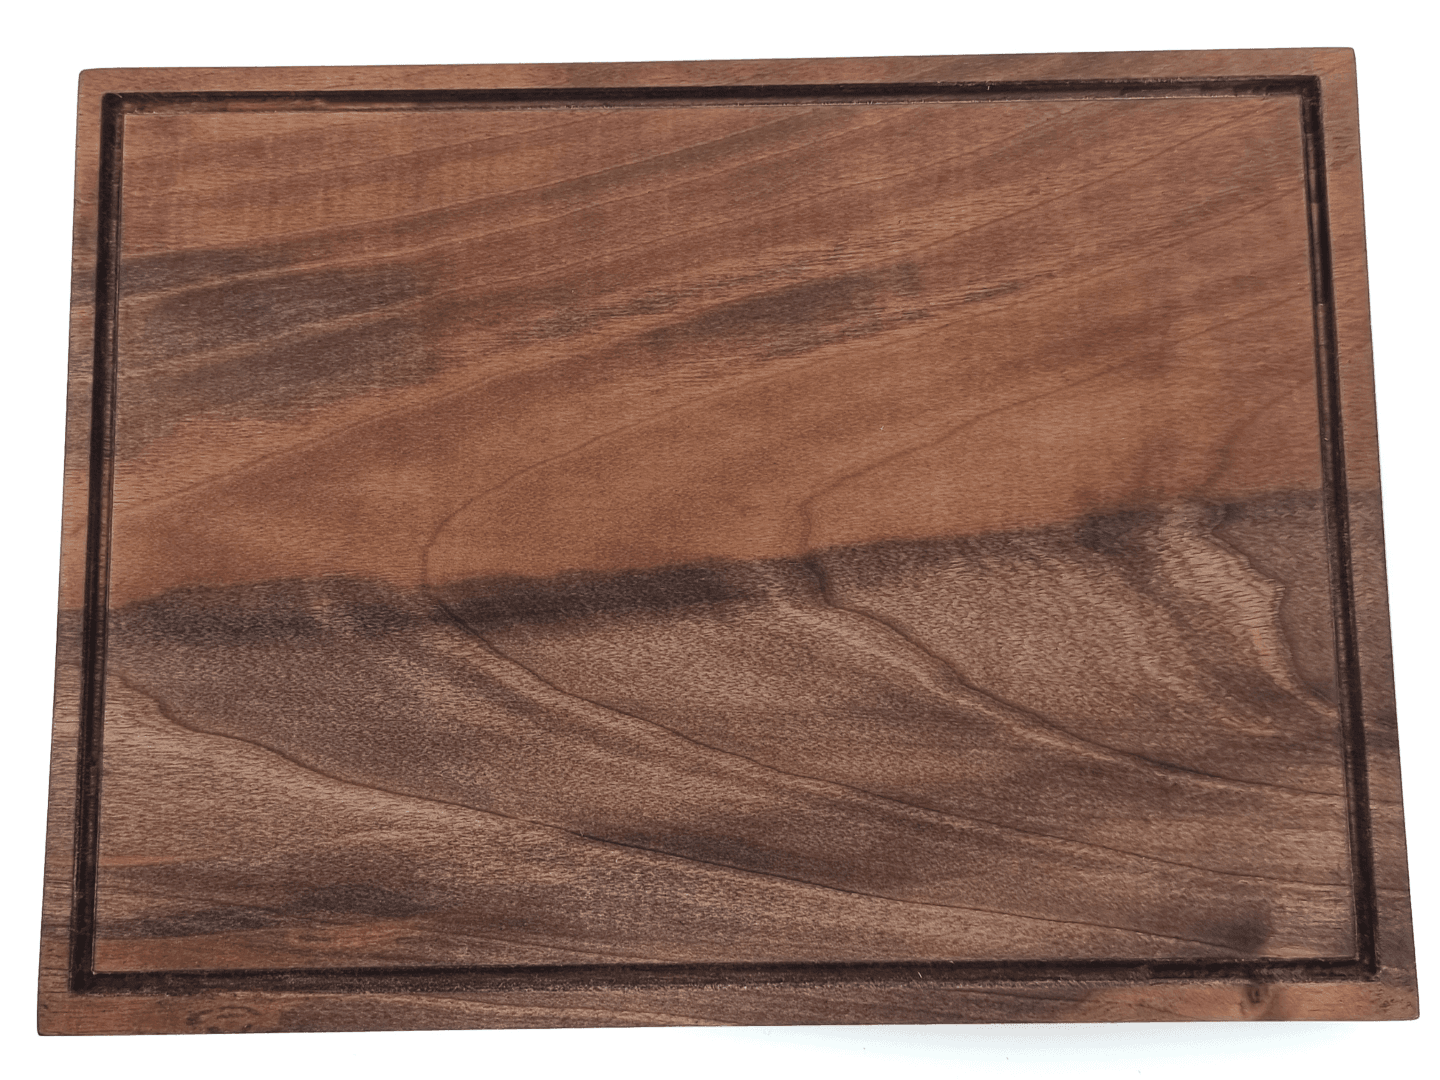 Walnut Cutting Board - Charcuterie Board | Minimalist Design